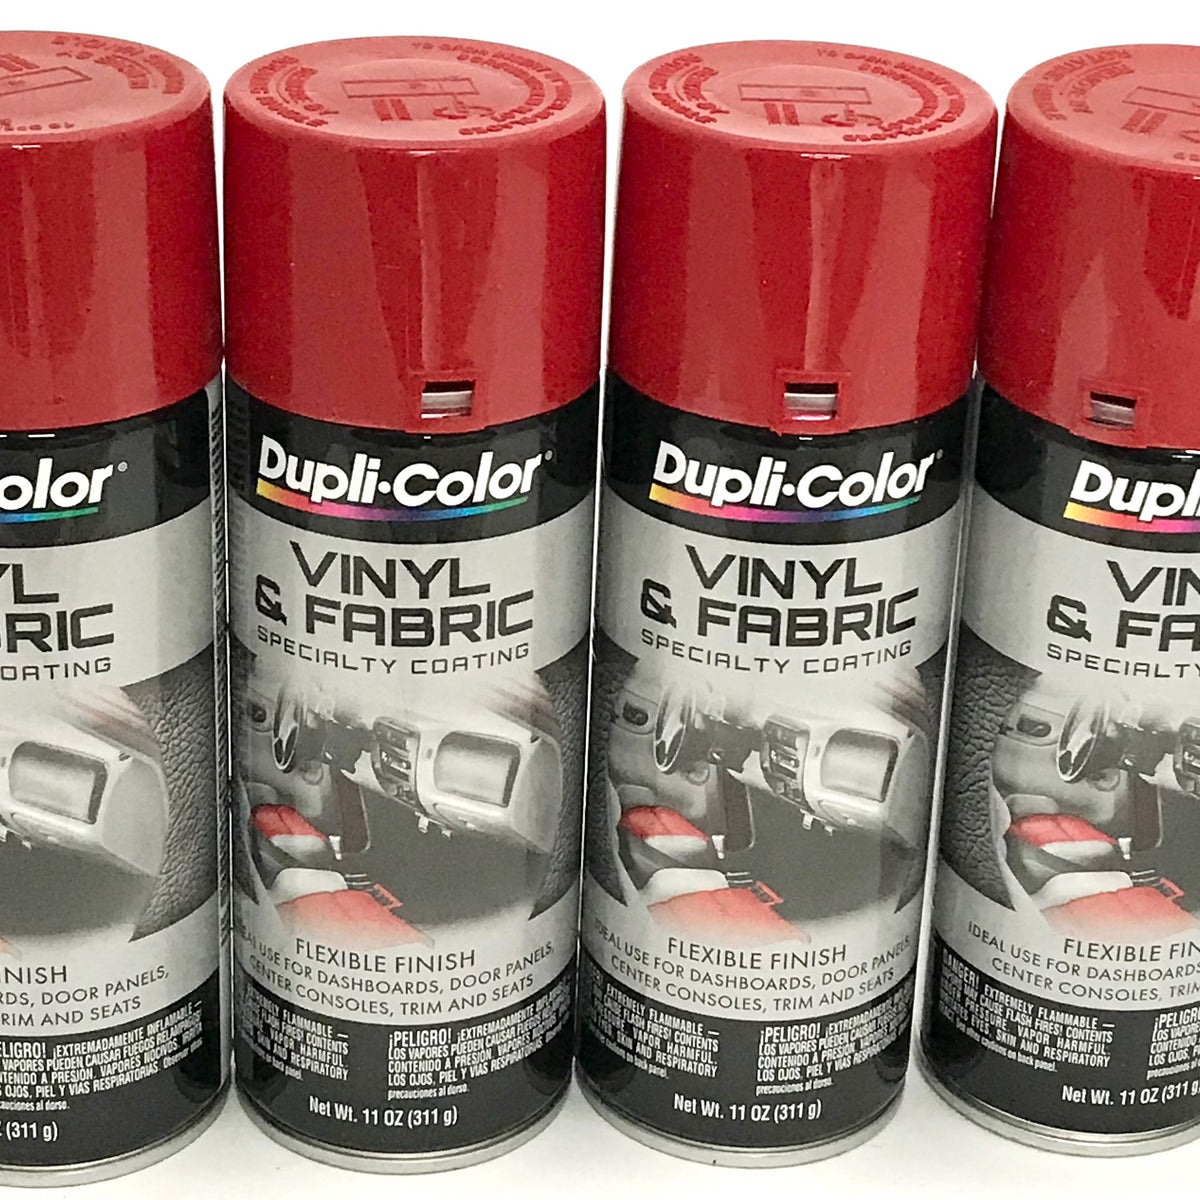 Dupli-Color HVP109 Medium Gray High Performance Vinyl and Fabric Spray - 11  oz. … (2 Pack)